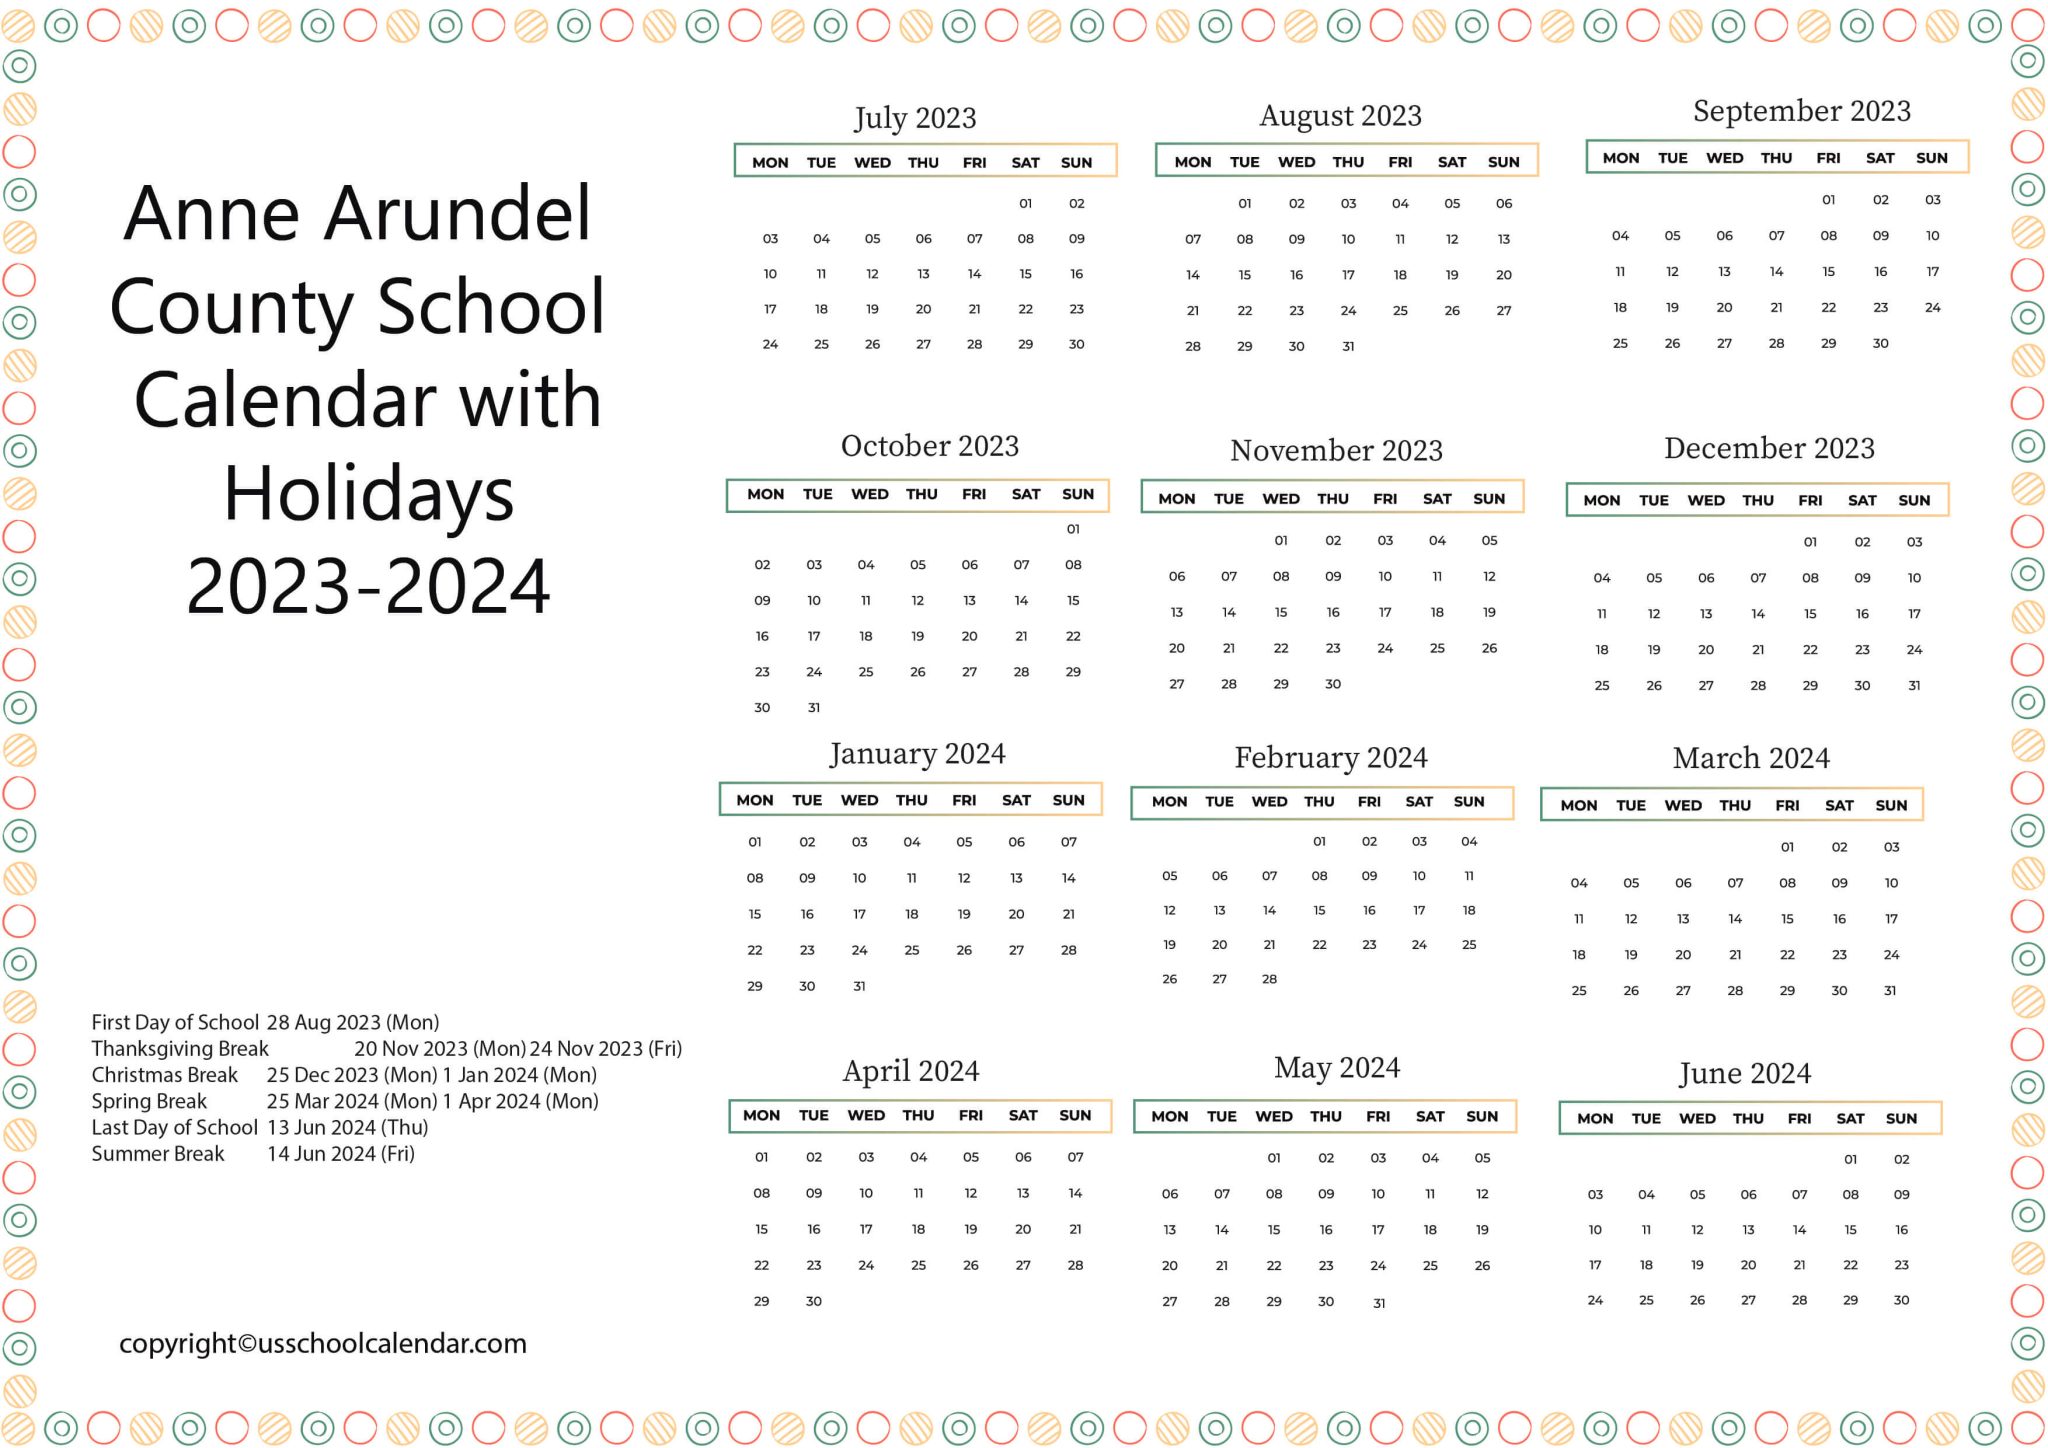 anne-arundel-county-school-calendar-2023-schoolcalendars